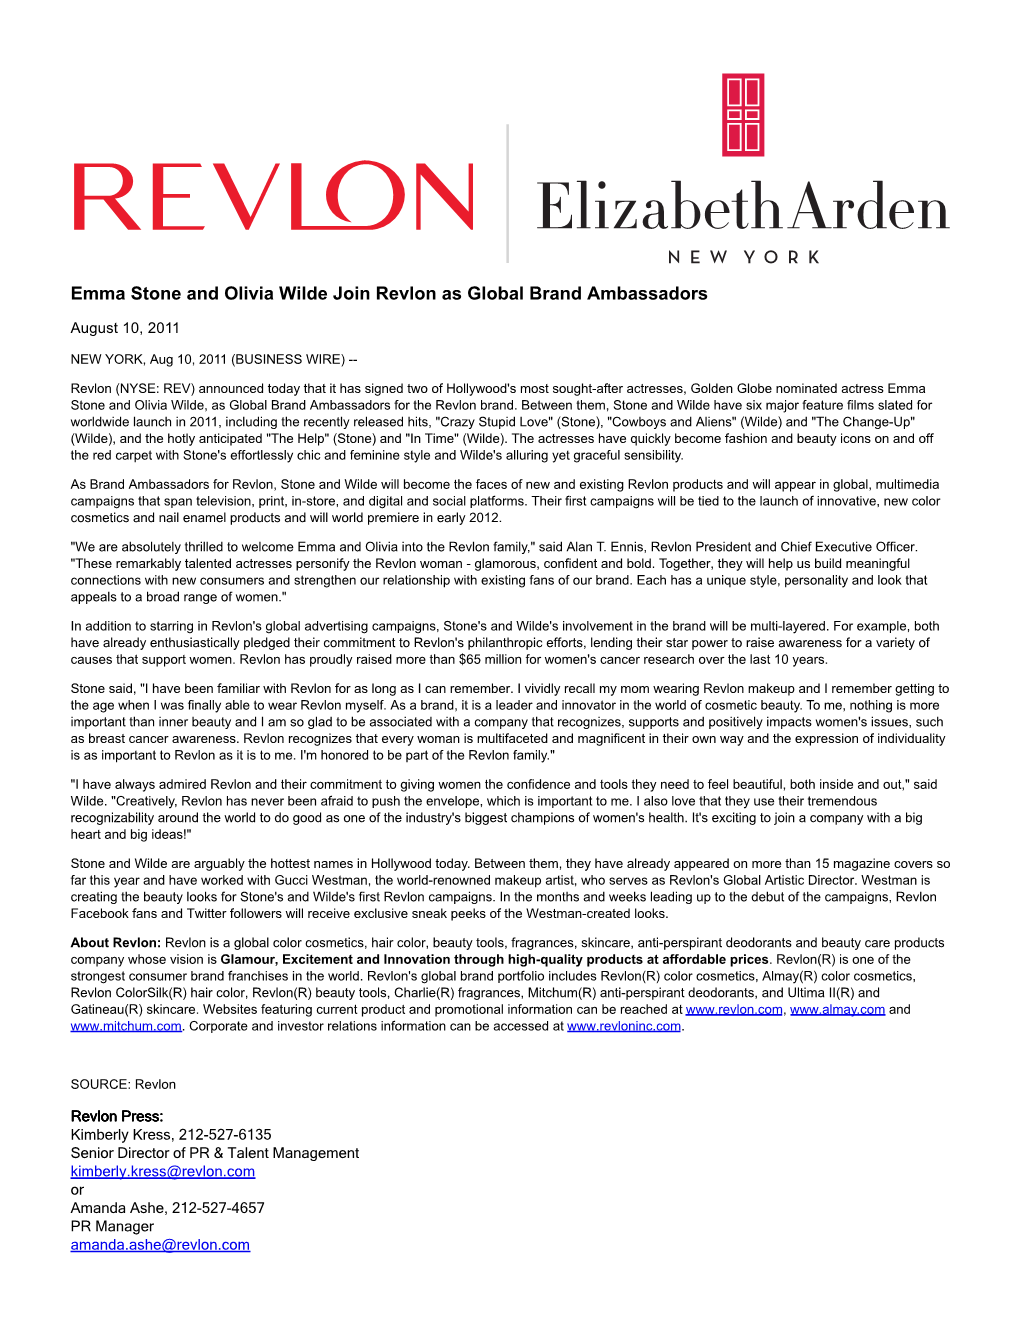 Emma Stone and Olivia Wilde Join Revlon As Global Brand Ambassadors